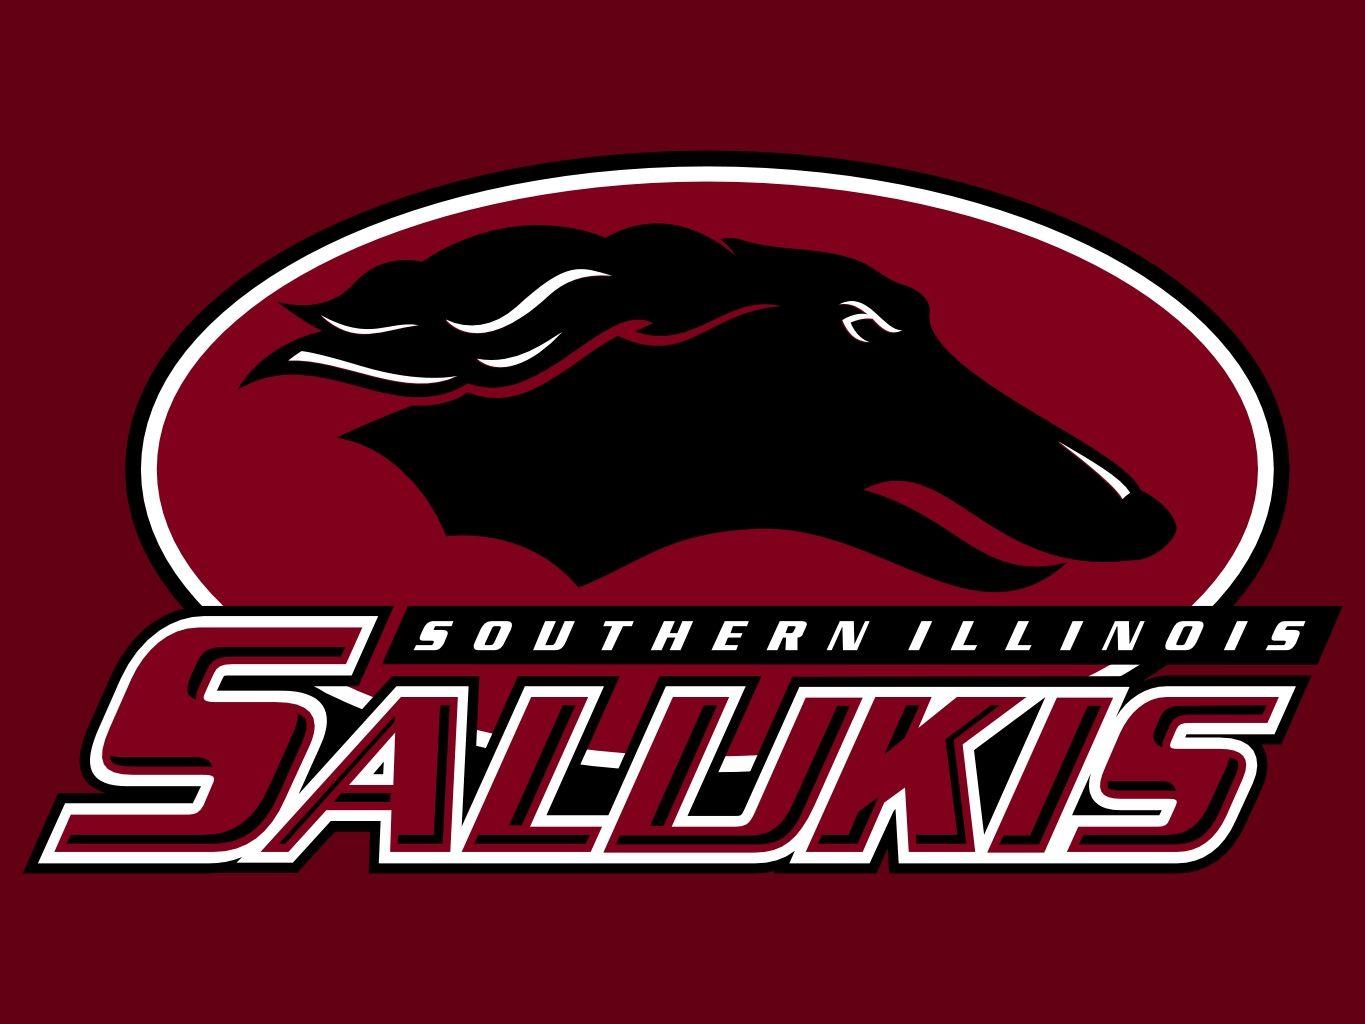 Southern Illinois Salukis Logo - Southern Illinois Salukis | NCAA Football Wiki | FANDOM powered by Wikia